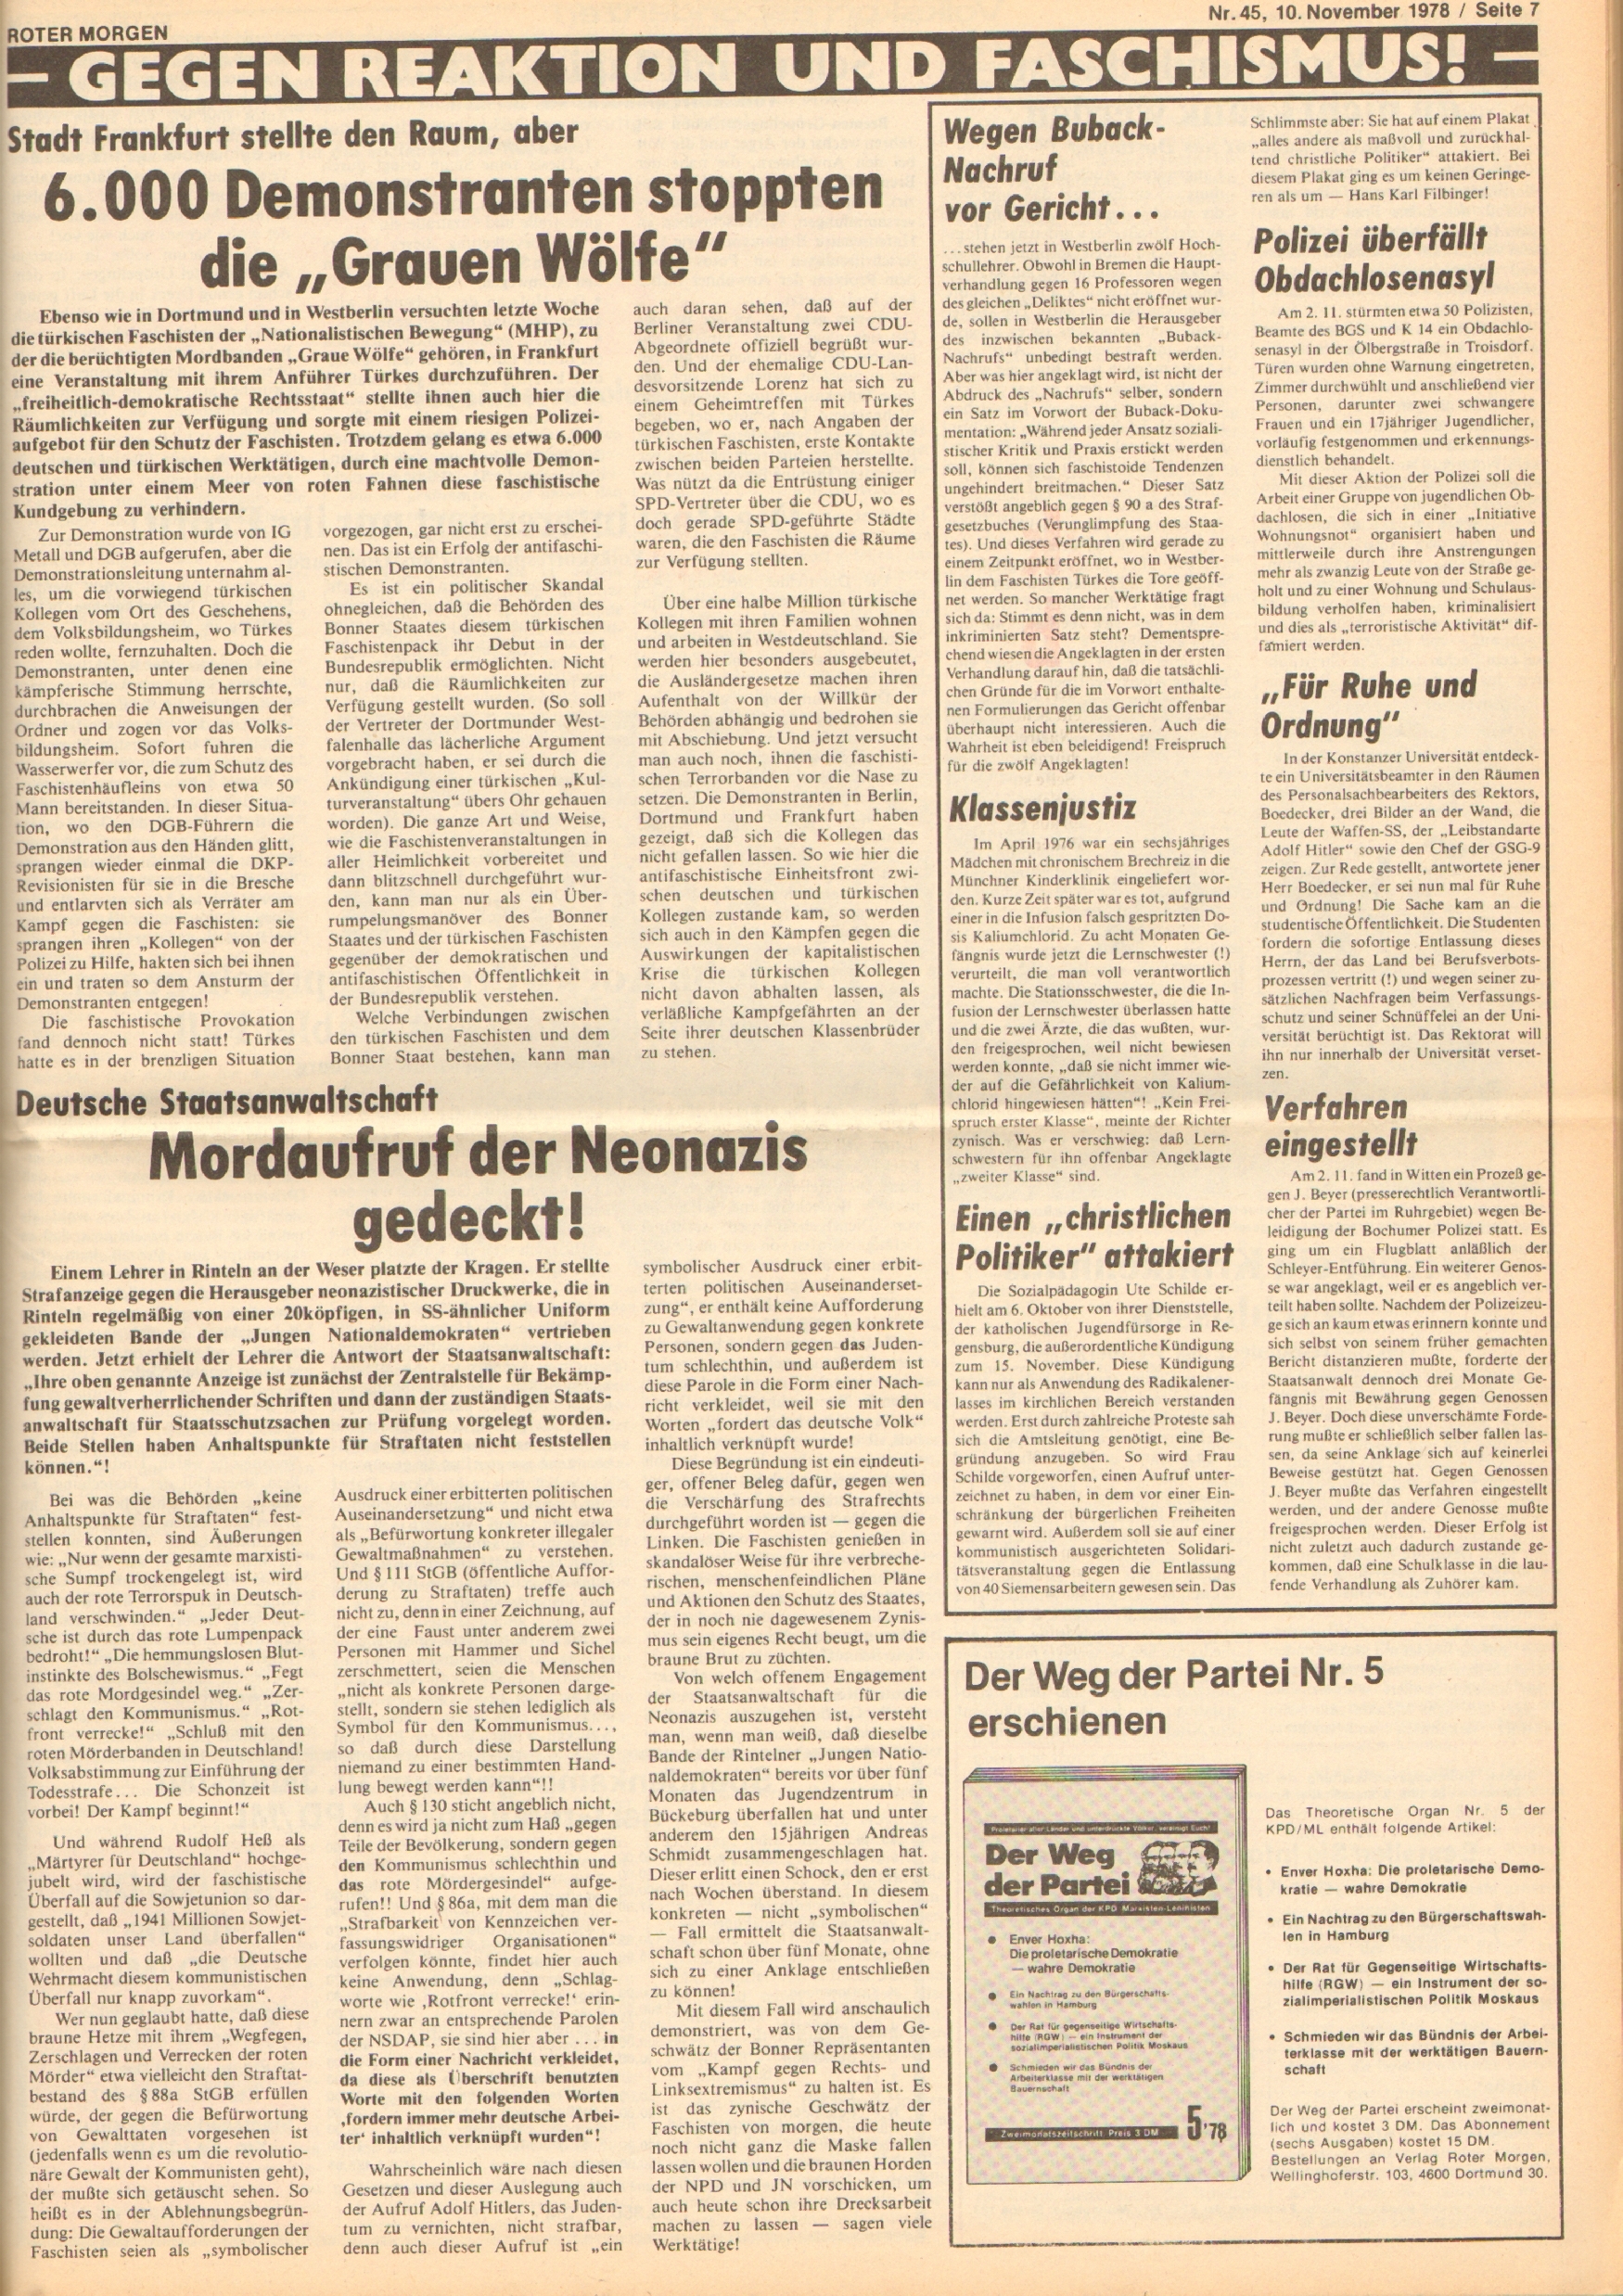 Roter Morgen, 12. Jg., 10. November 1978, Nr. 45, Seite 7